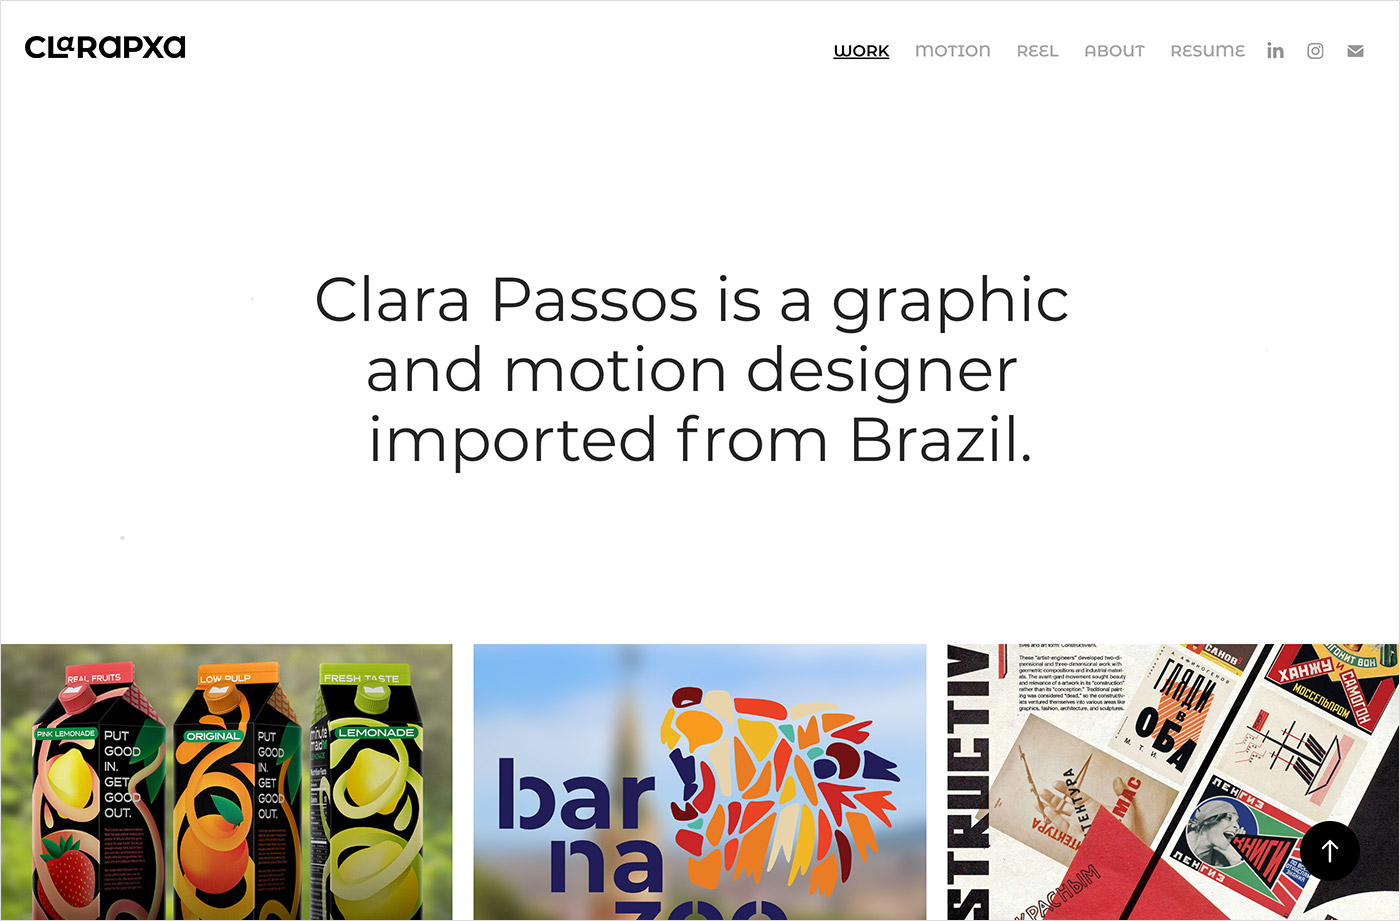 Clara Passosウェブサイトの画面キャプチャ画像